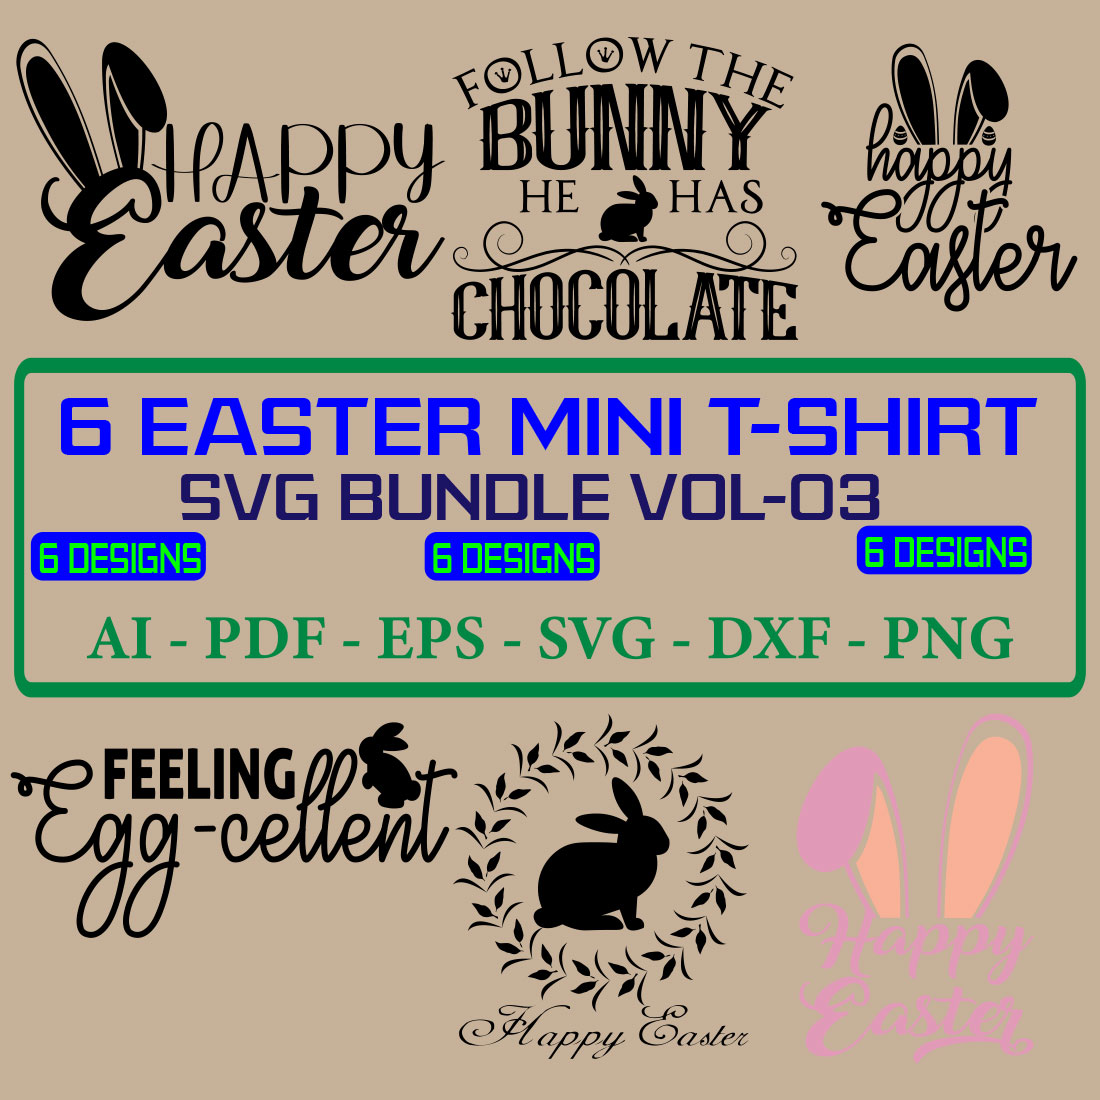 6 Easter Mini T-shirt SVG Bundle Vol 03 cover image.